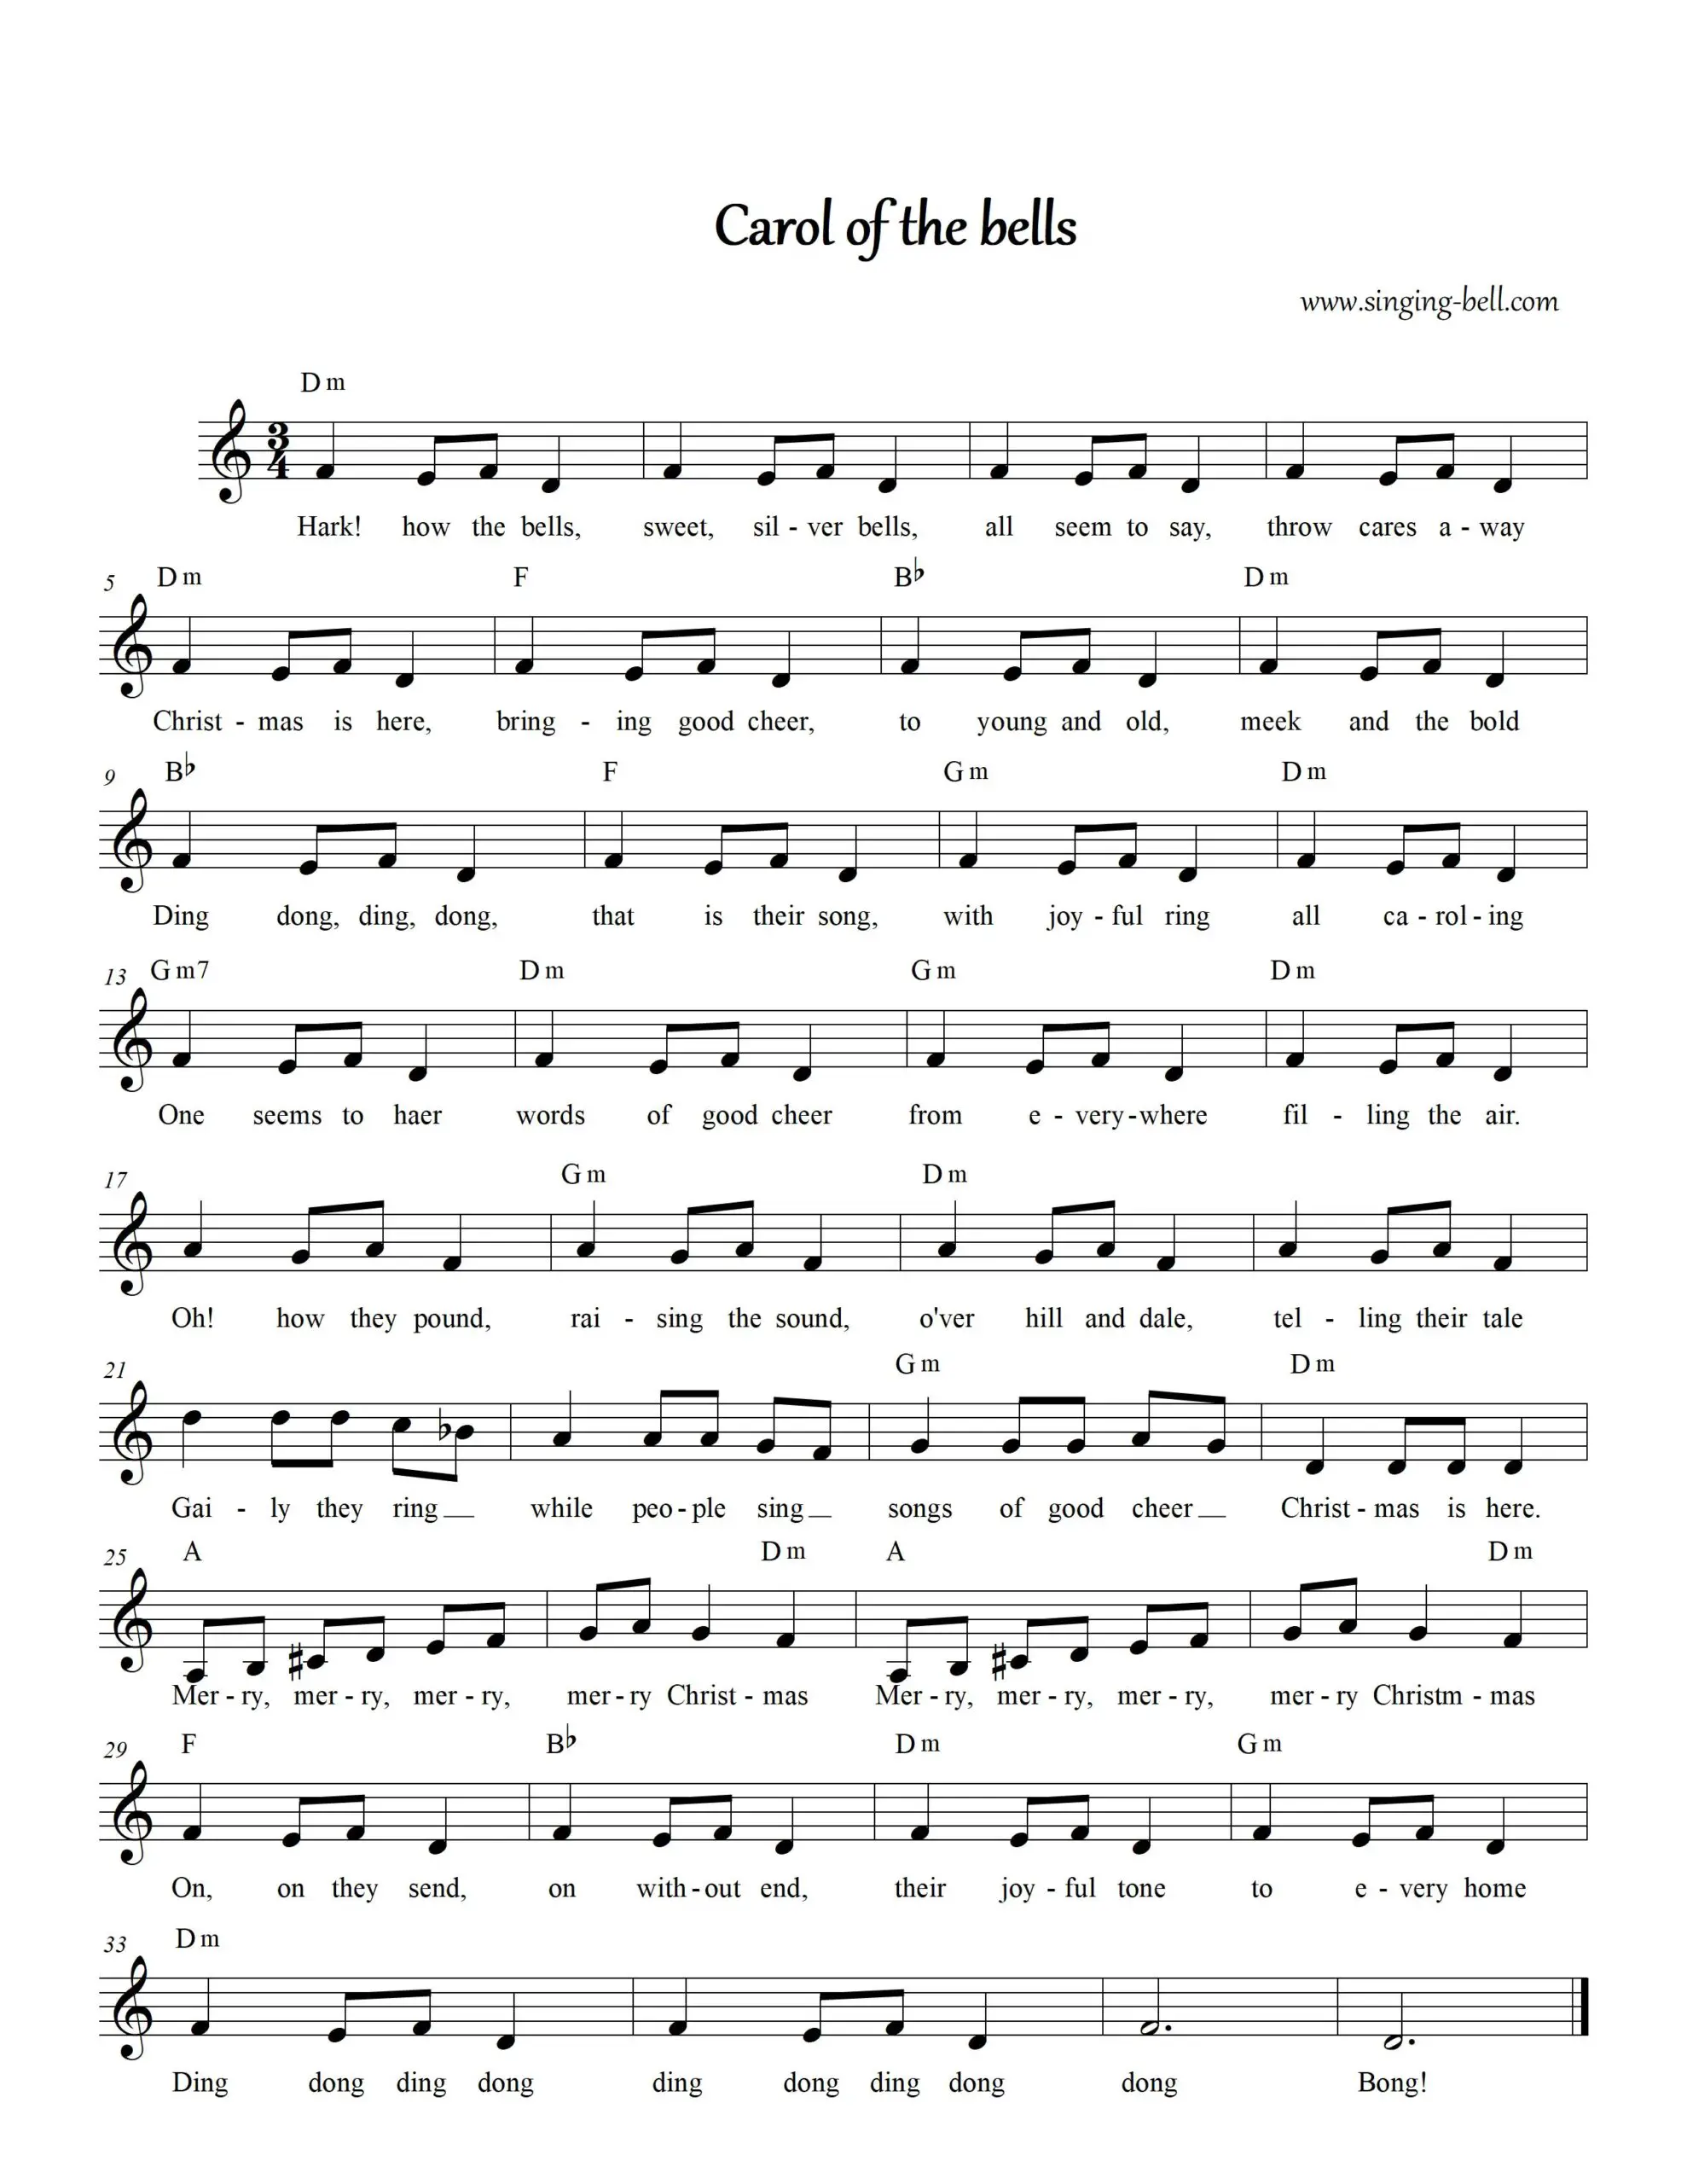 Carol of the Bells - Christmas song sheet music in Dm